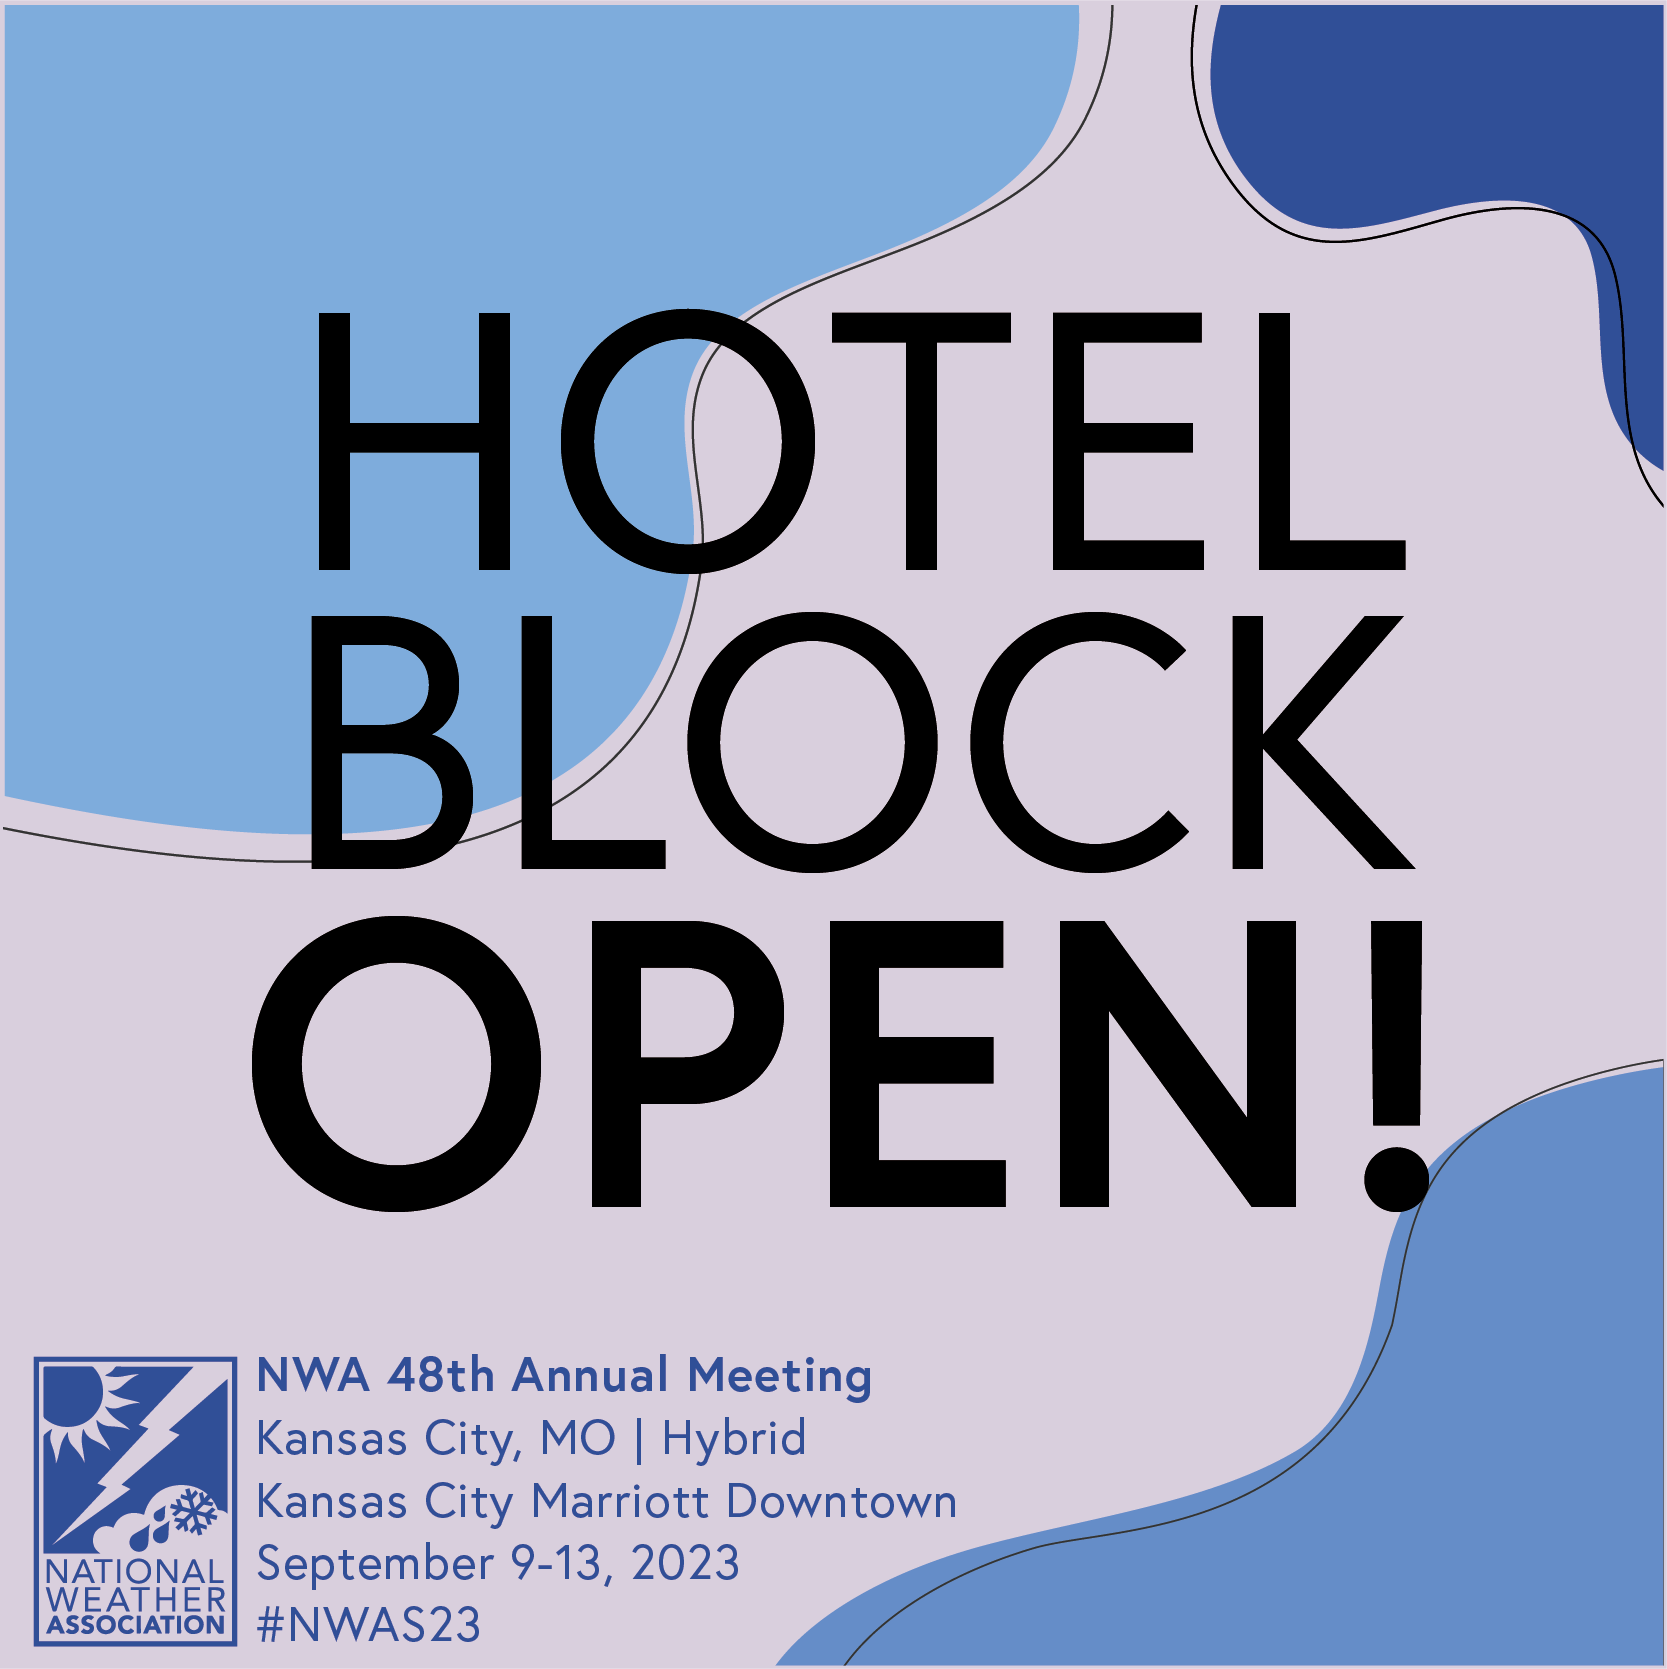 Hotel Block Open: NWA 48th Annual Meeting Kansas City, MO | Hybrid Kansas City Marriott Downtown September 9-13. 2023 #NWAS23